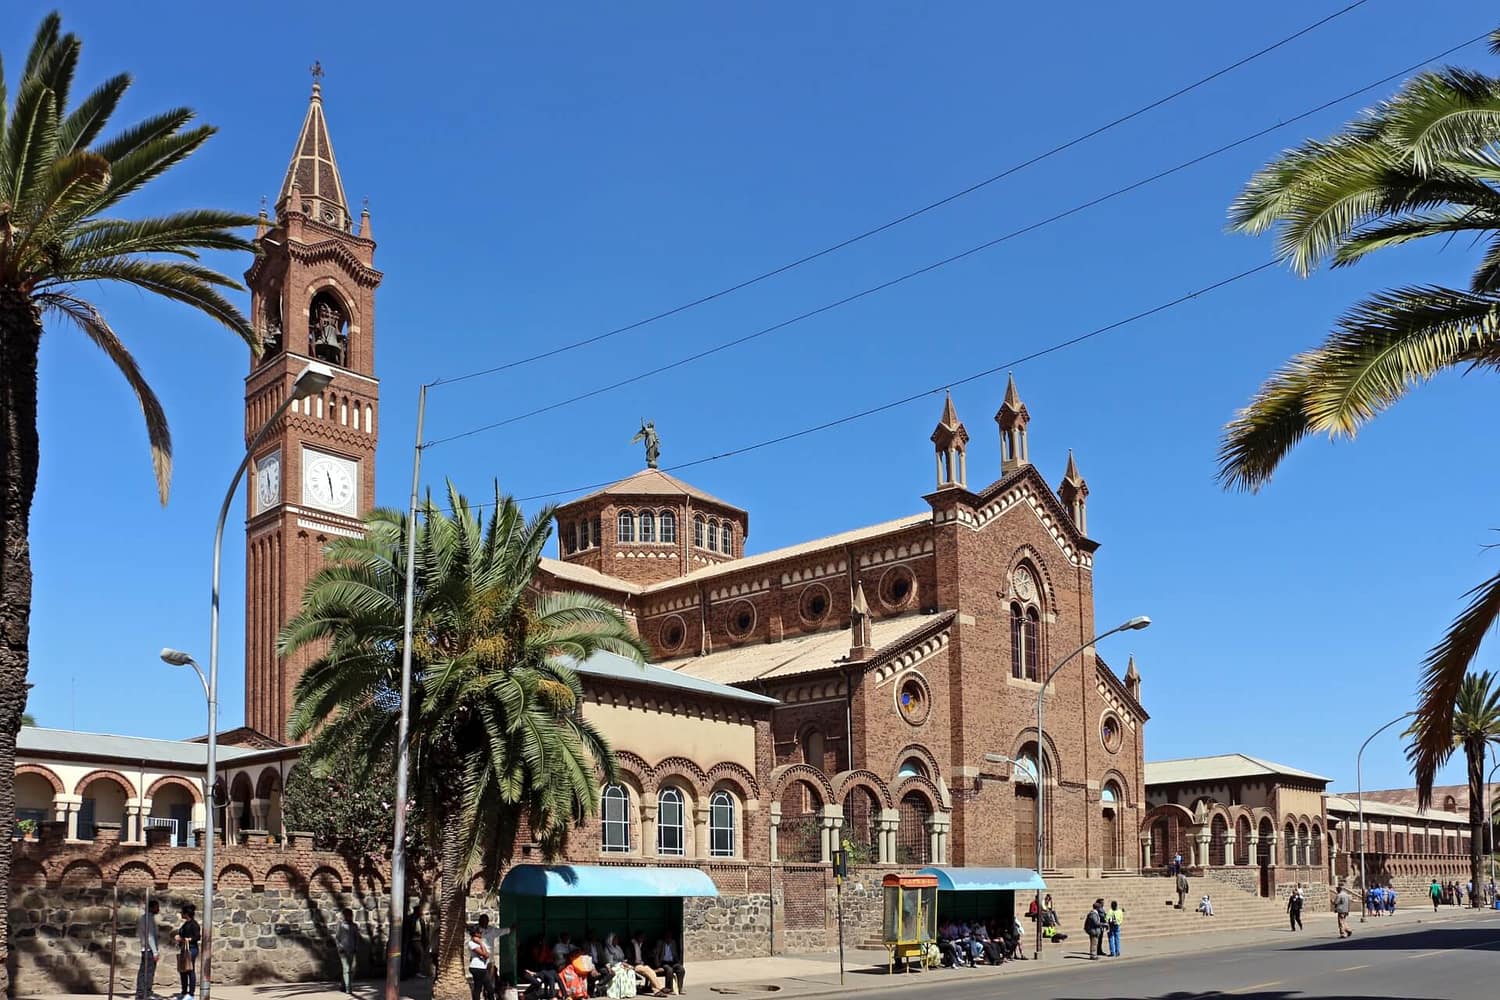 Tour Asmara, Asmara Roman Catholic church